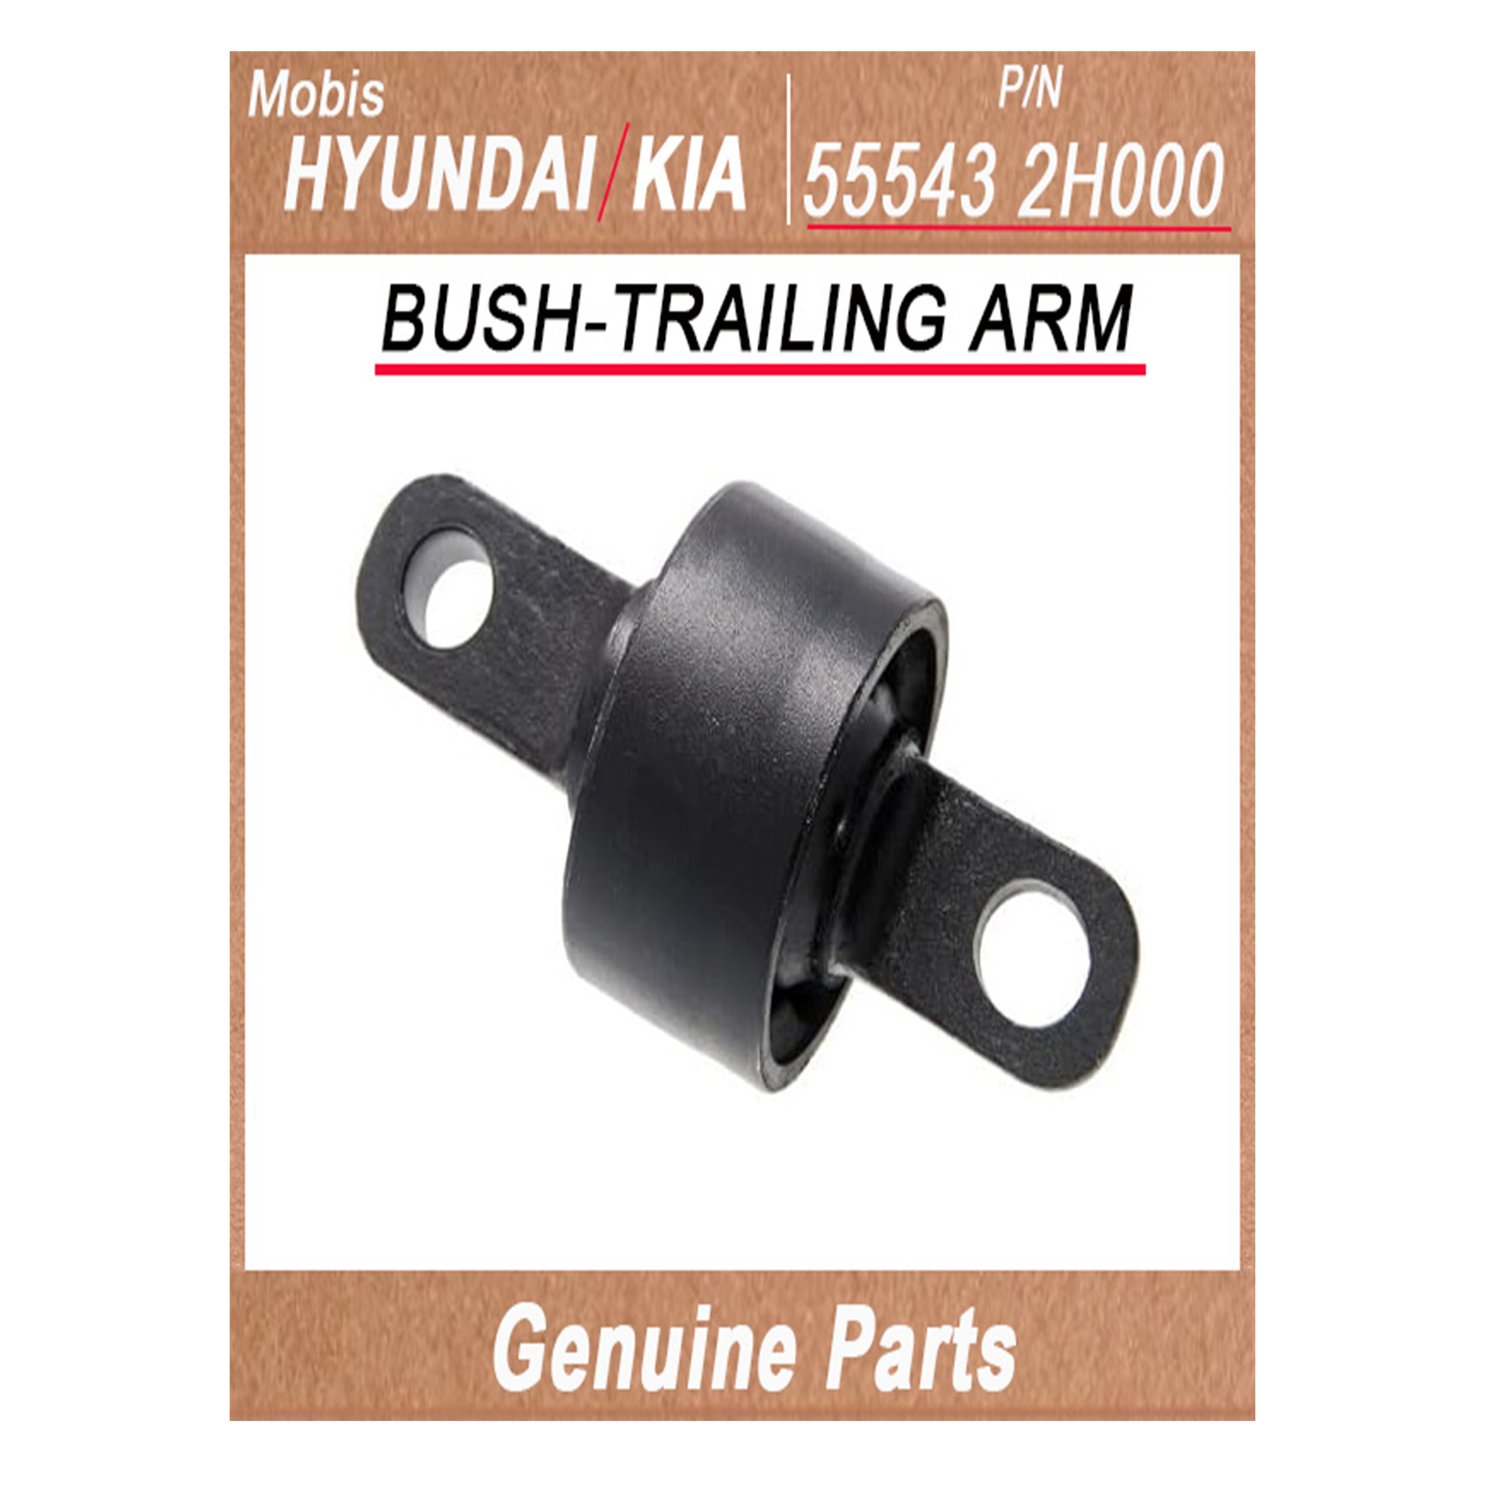 555432H000 _ BUSH_TRAILING ARM _ Genuine Korean Automotive Spare Parts _ Hyundai Kia _Mobis_